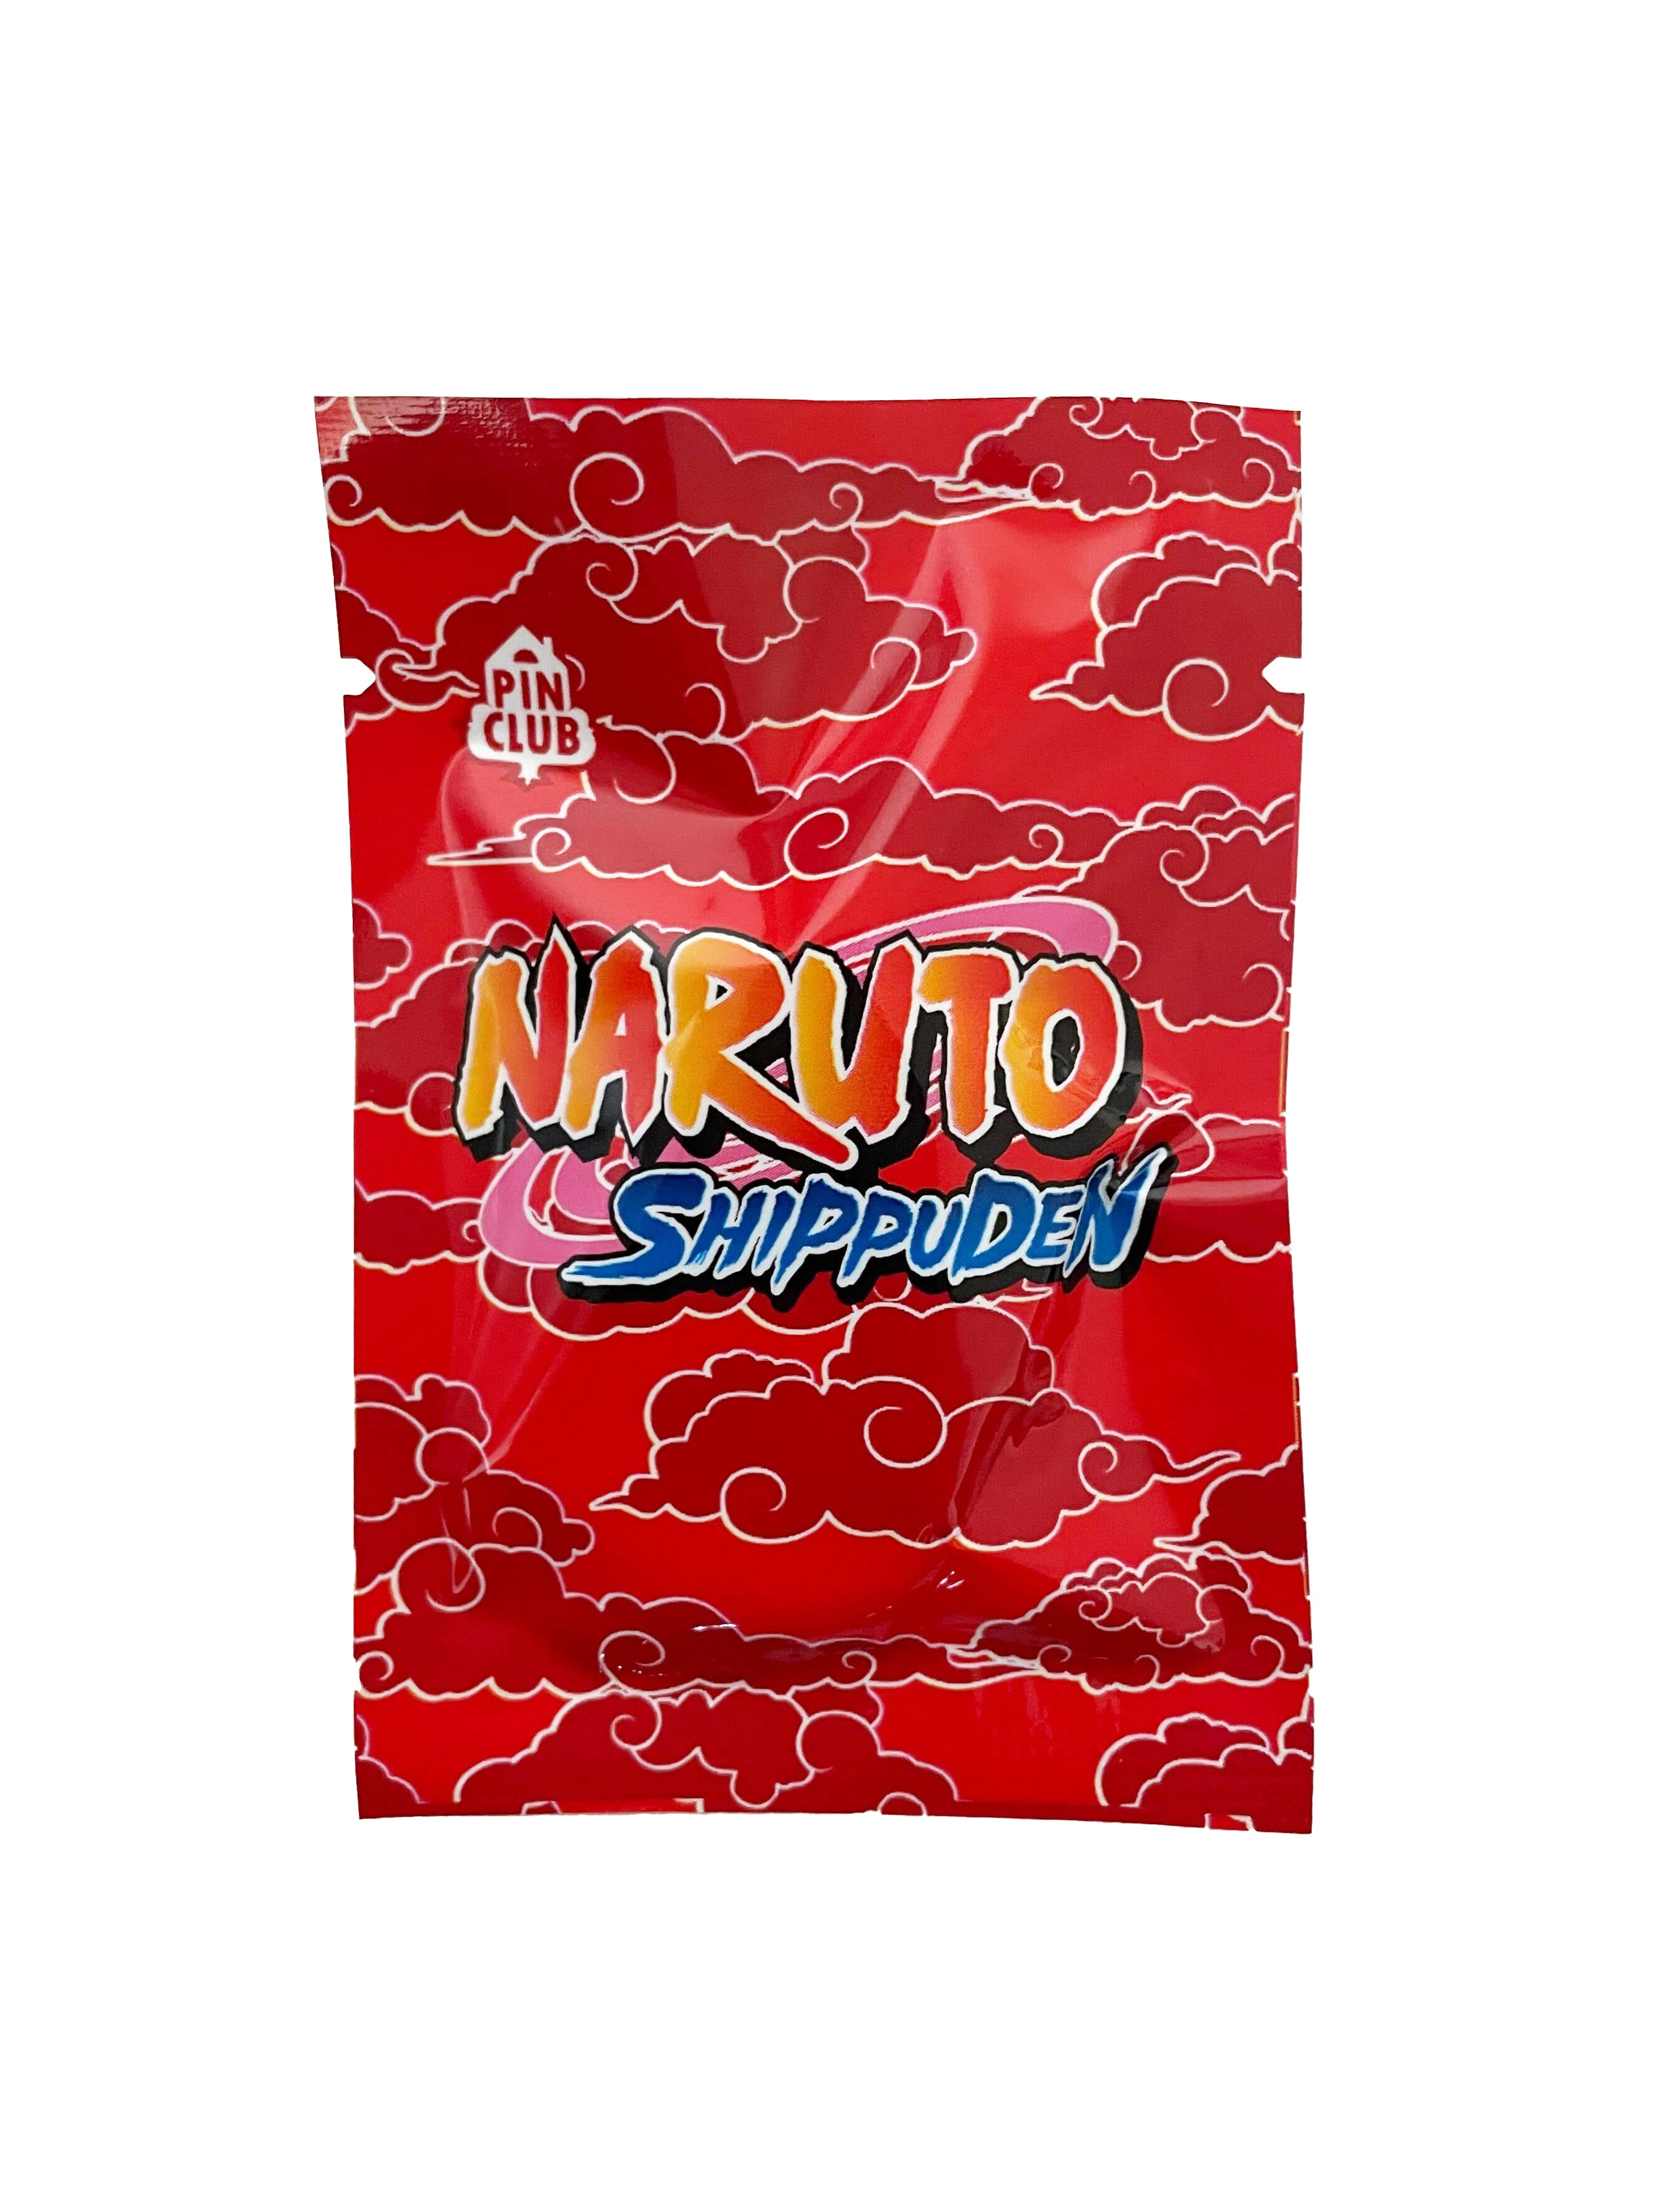 Naruto Shippuden - Akatsuki Blind Box Enamel Pin - Crunchyroll Exclusive! image count 1